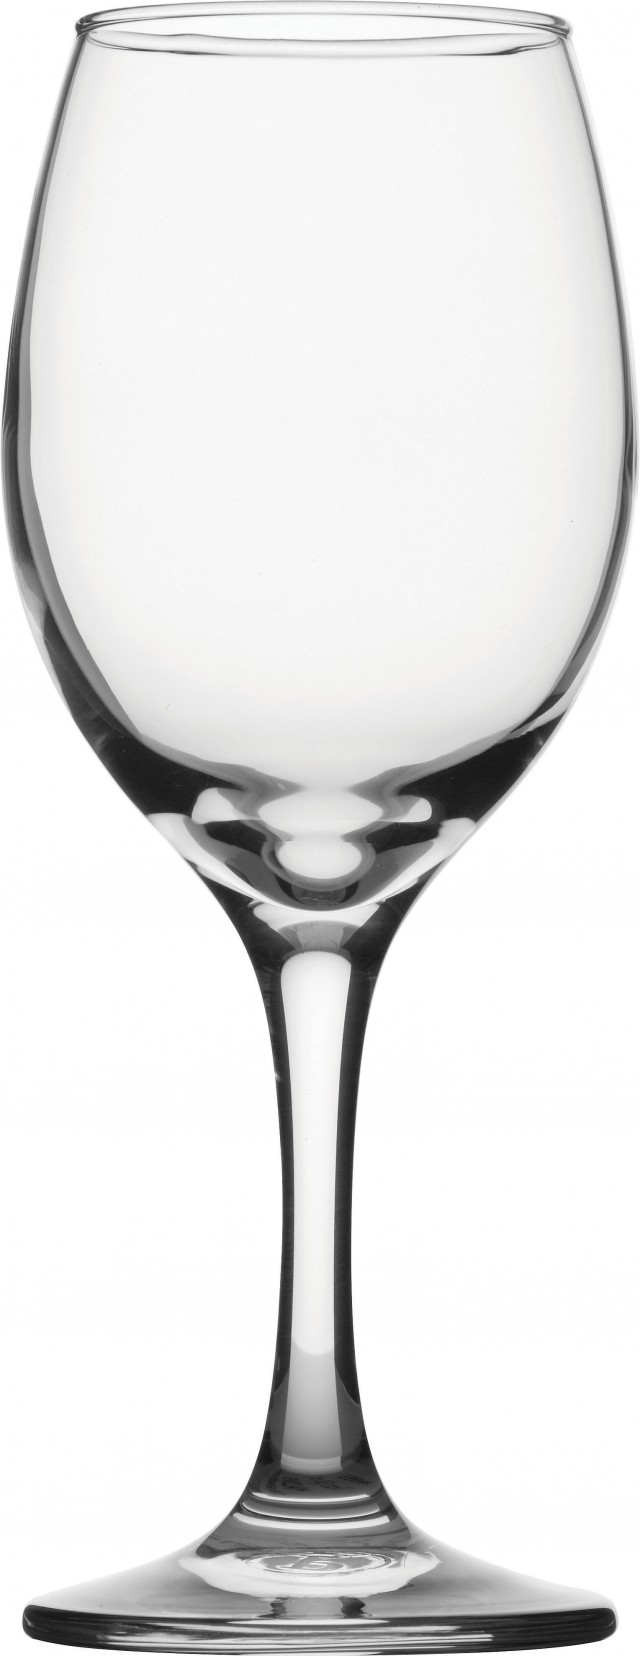 clip art free wine glasses - photo #45